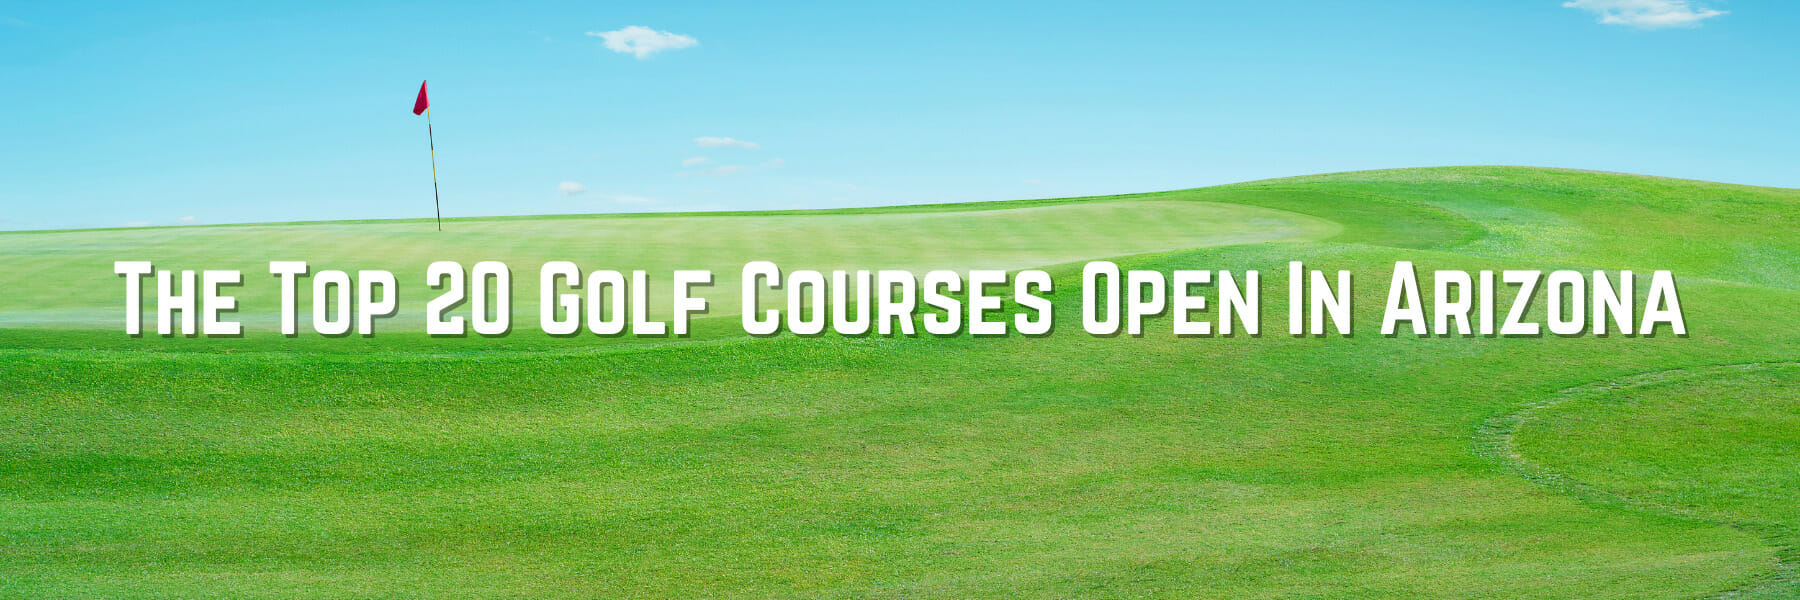 The Top 20 Golf Courses Open In Arizona